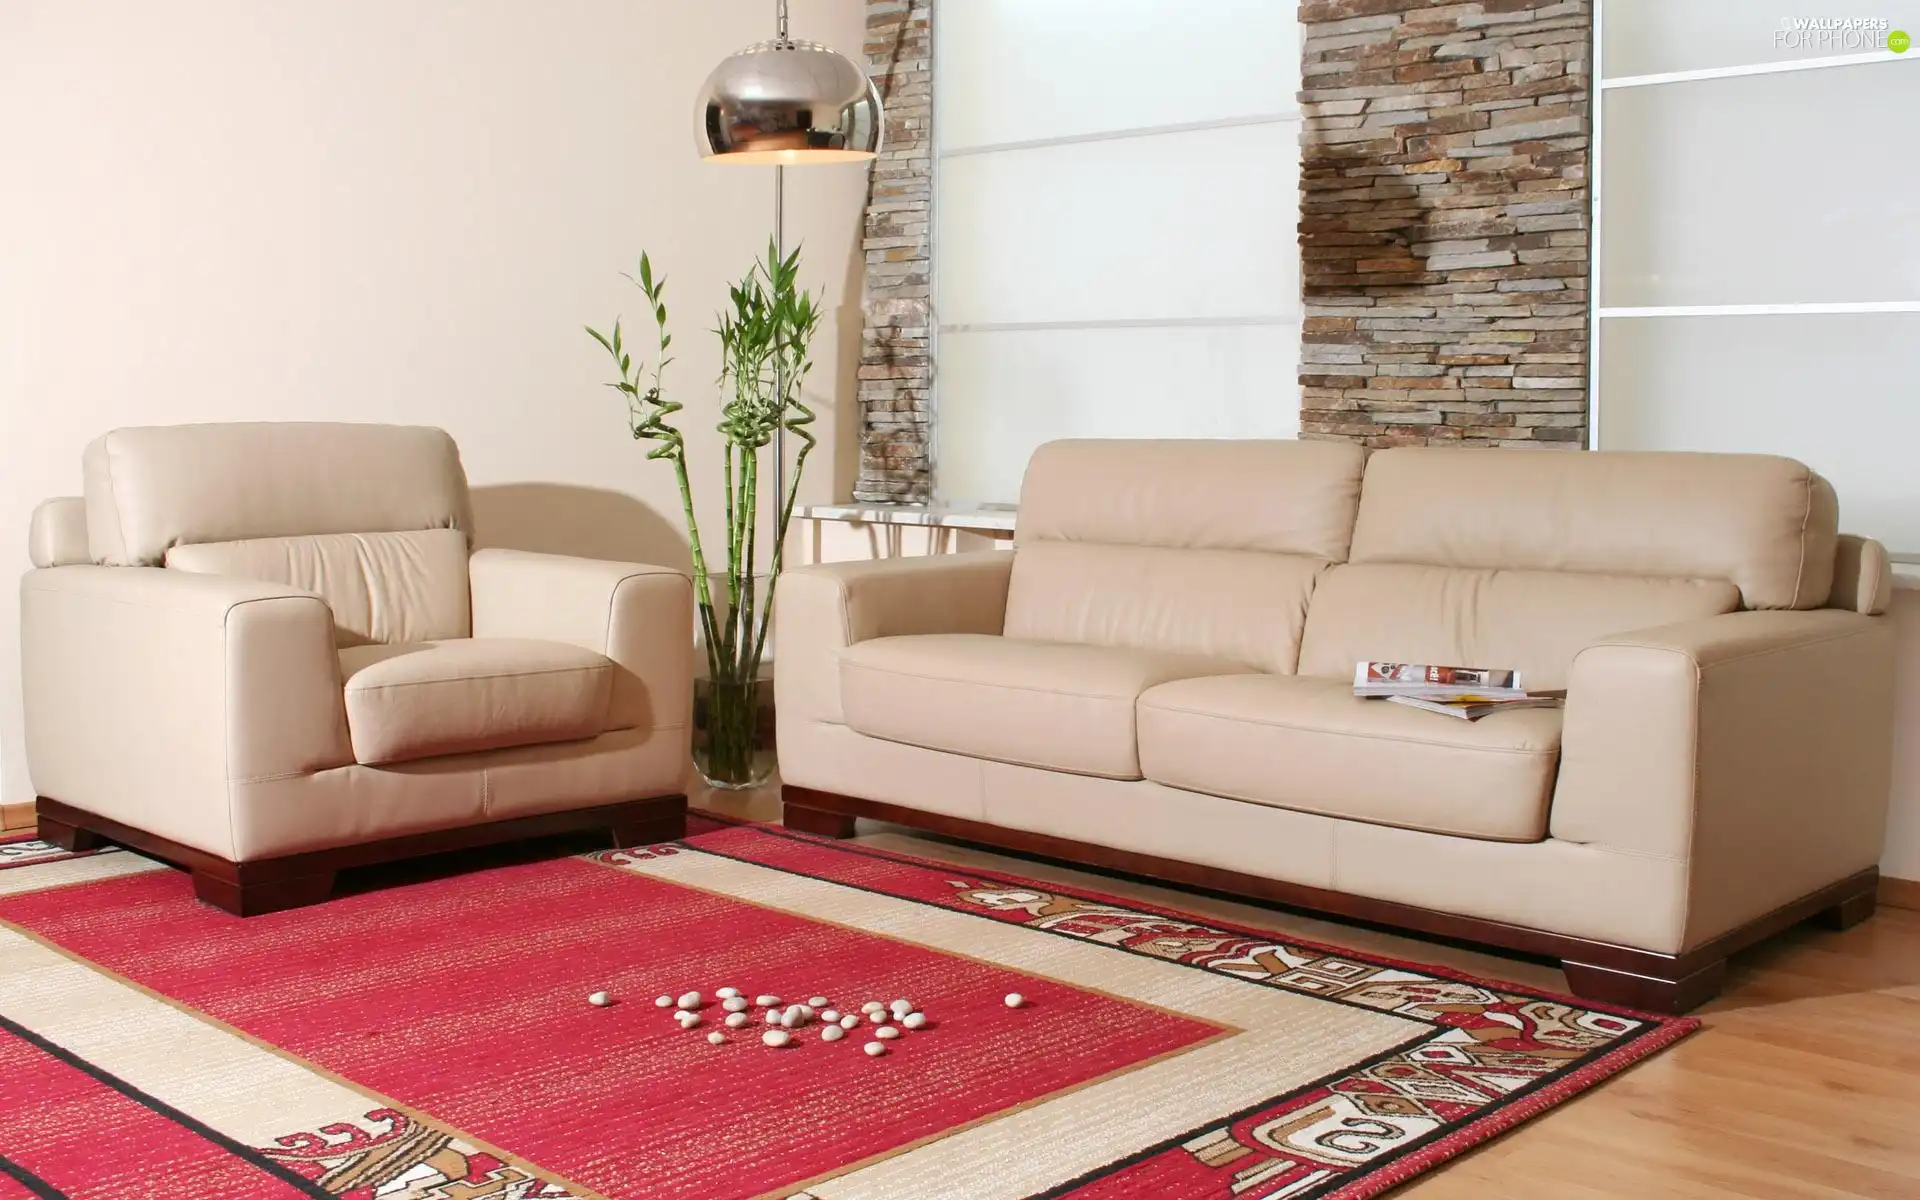 wine glass, Colourfull Flowers, Armchair, carpet, Sofa